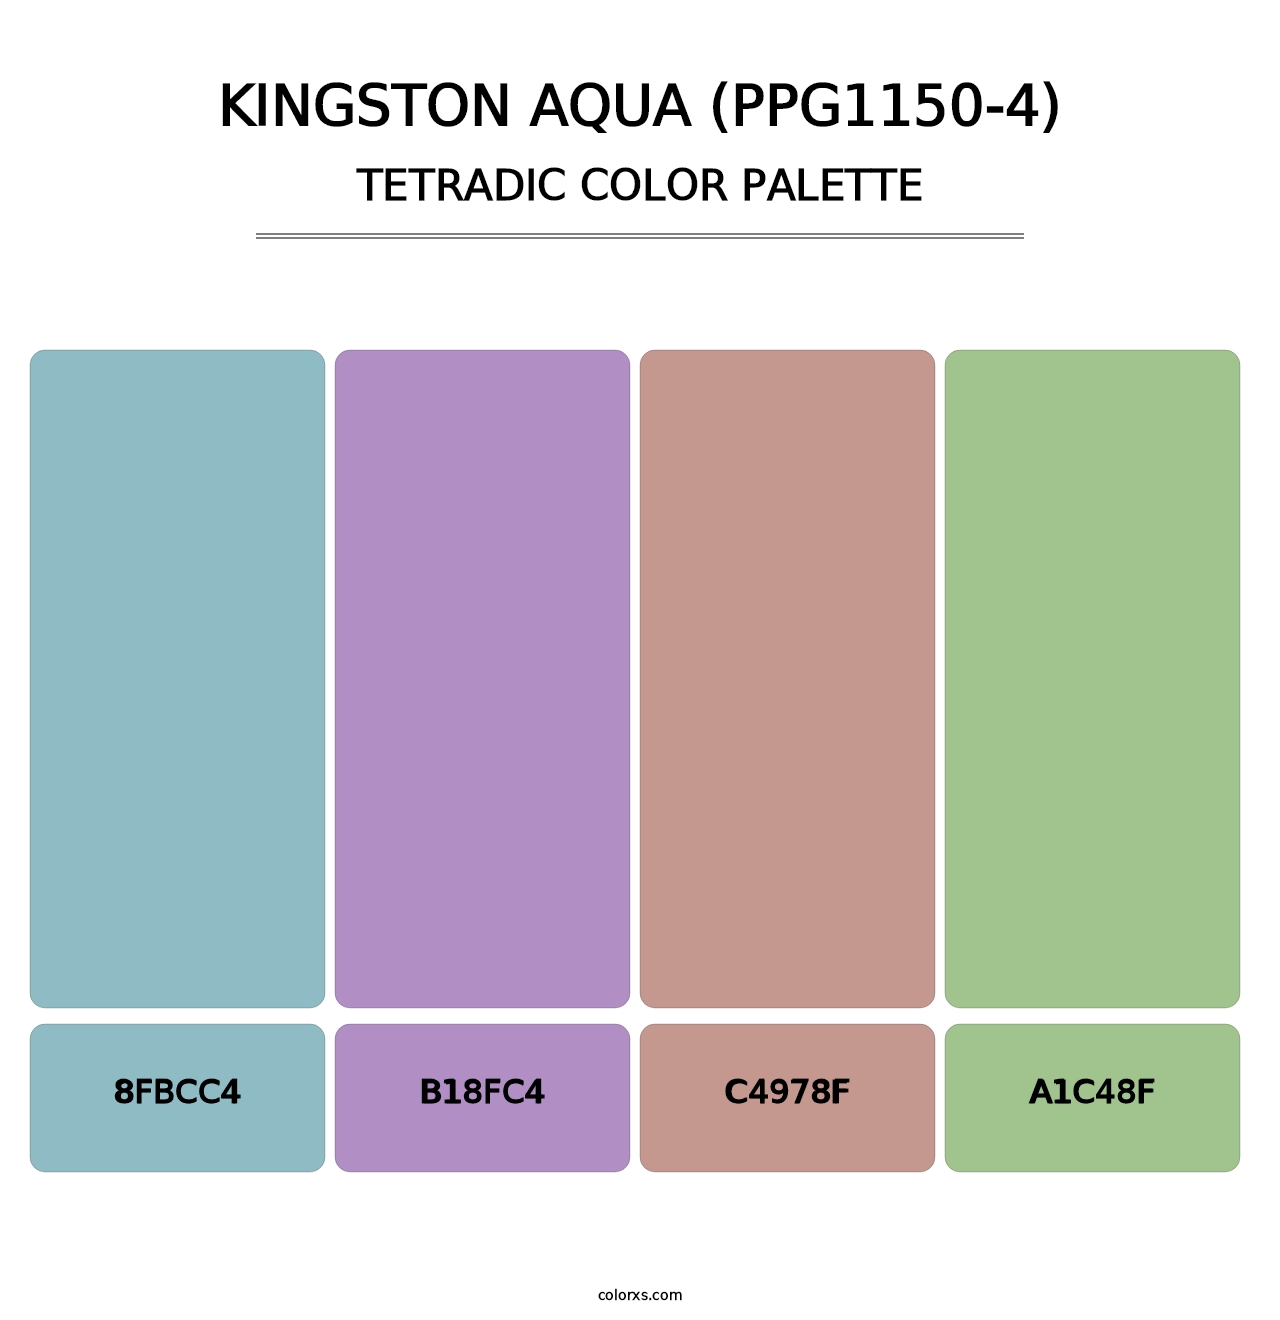 Kingston Aqua (PPG1150-4) - Tetradic Color Palette